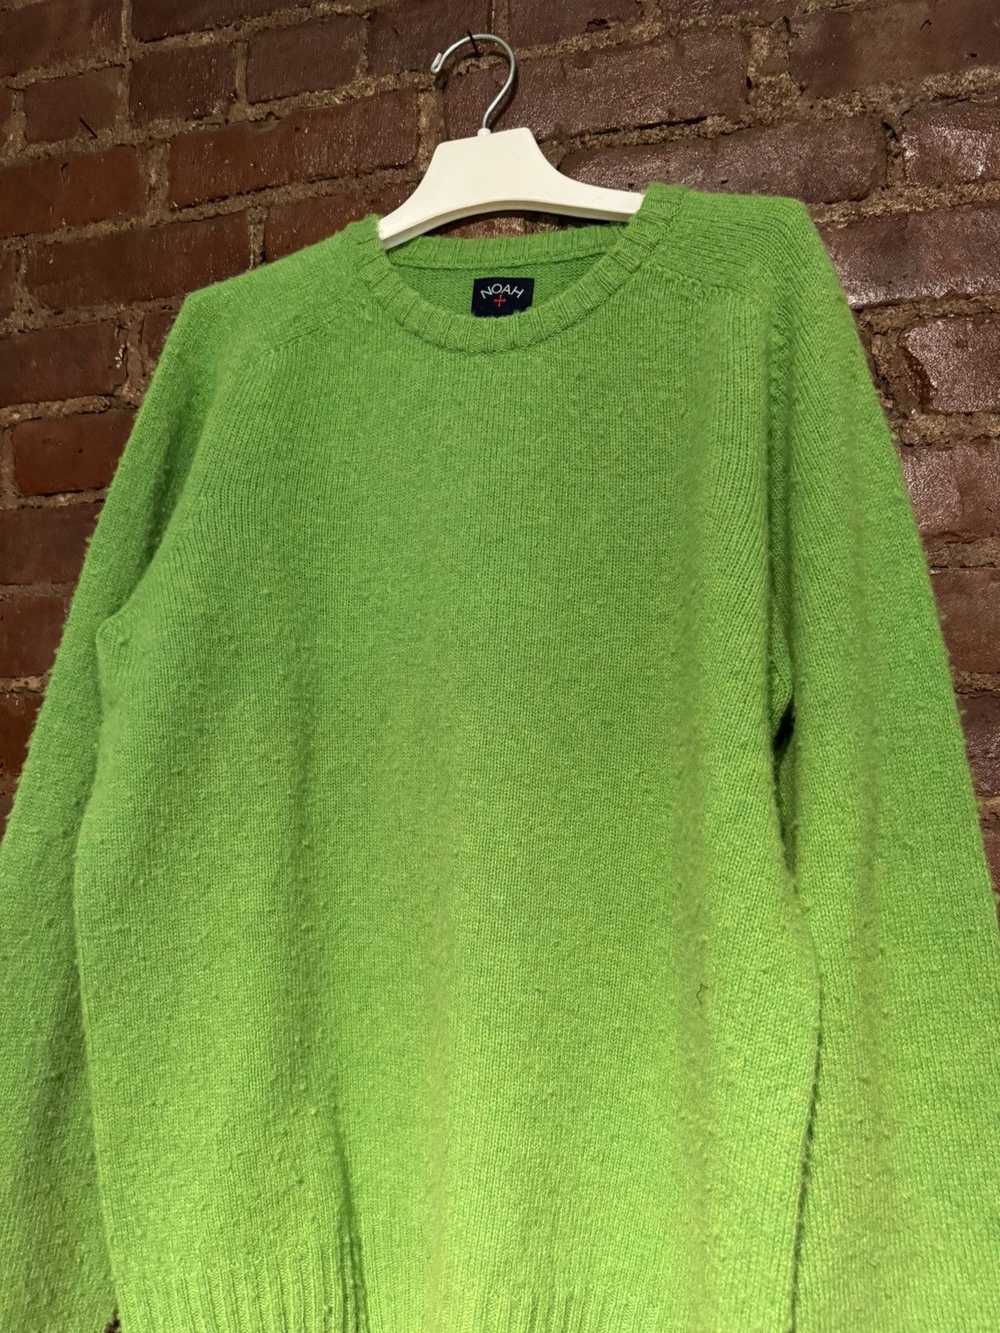 Noah Noah NY Green Shetland Sweater - image 2